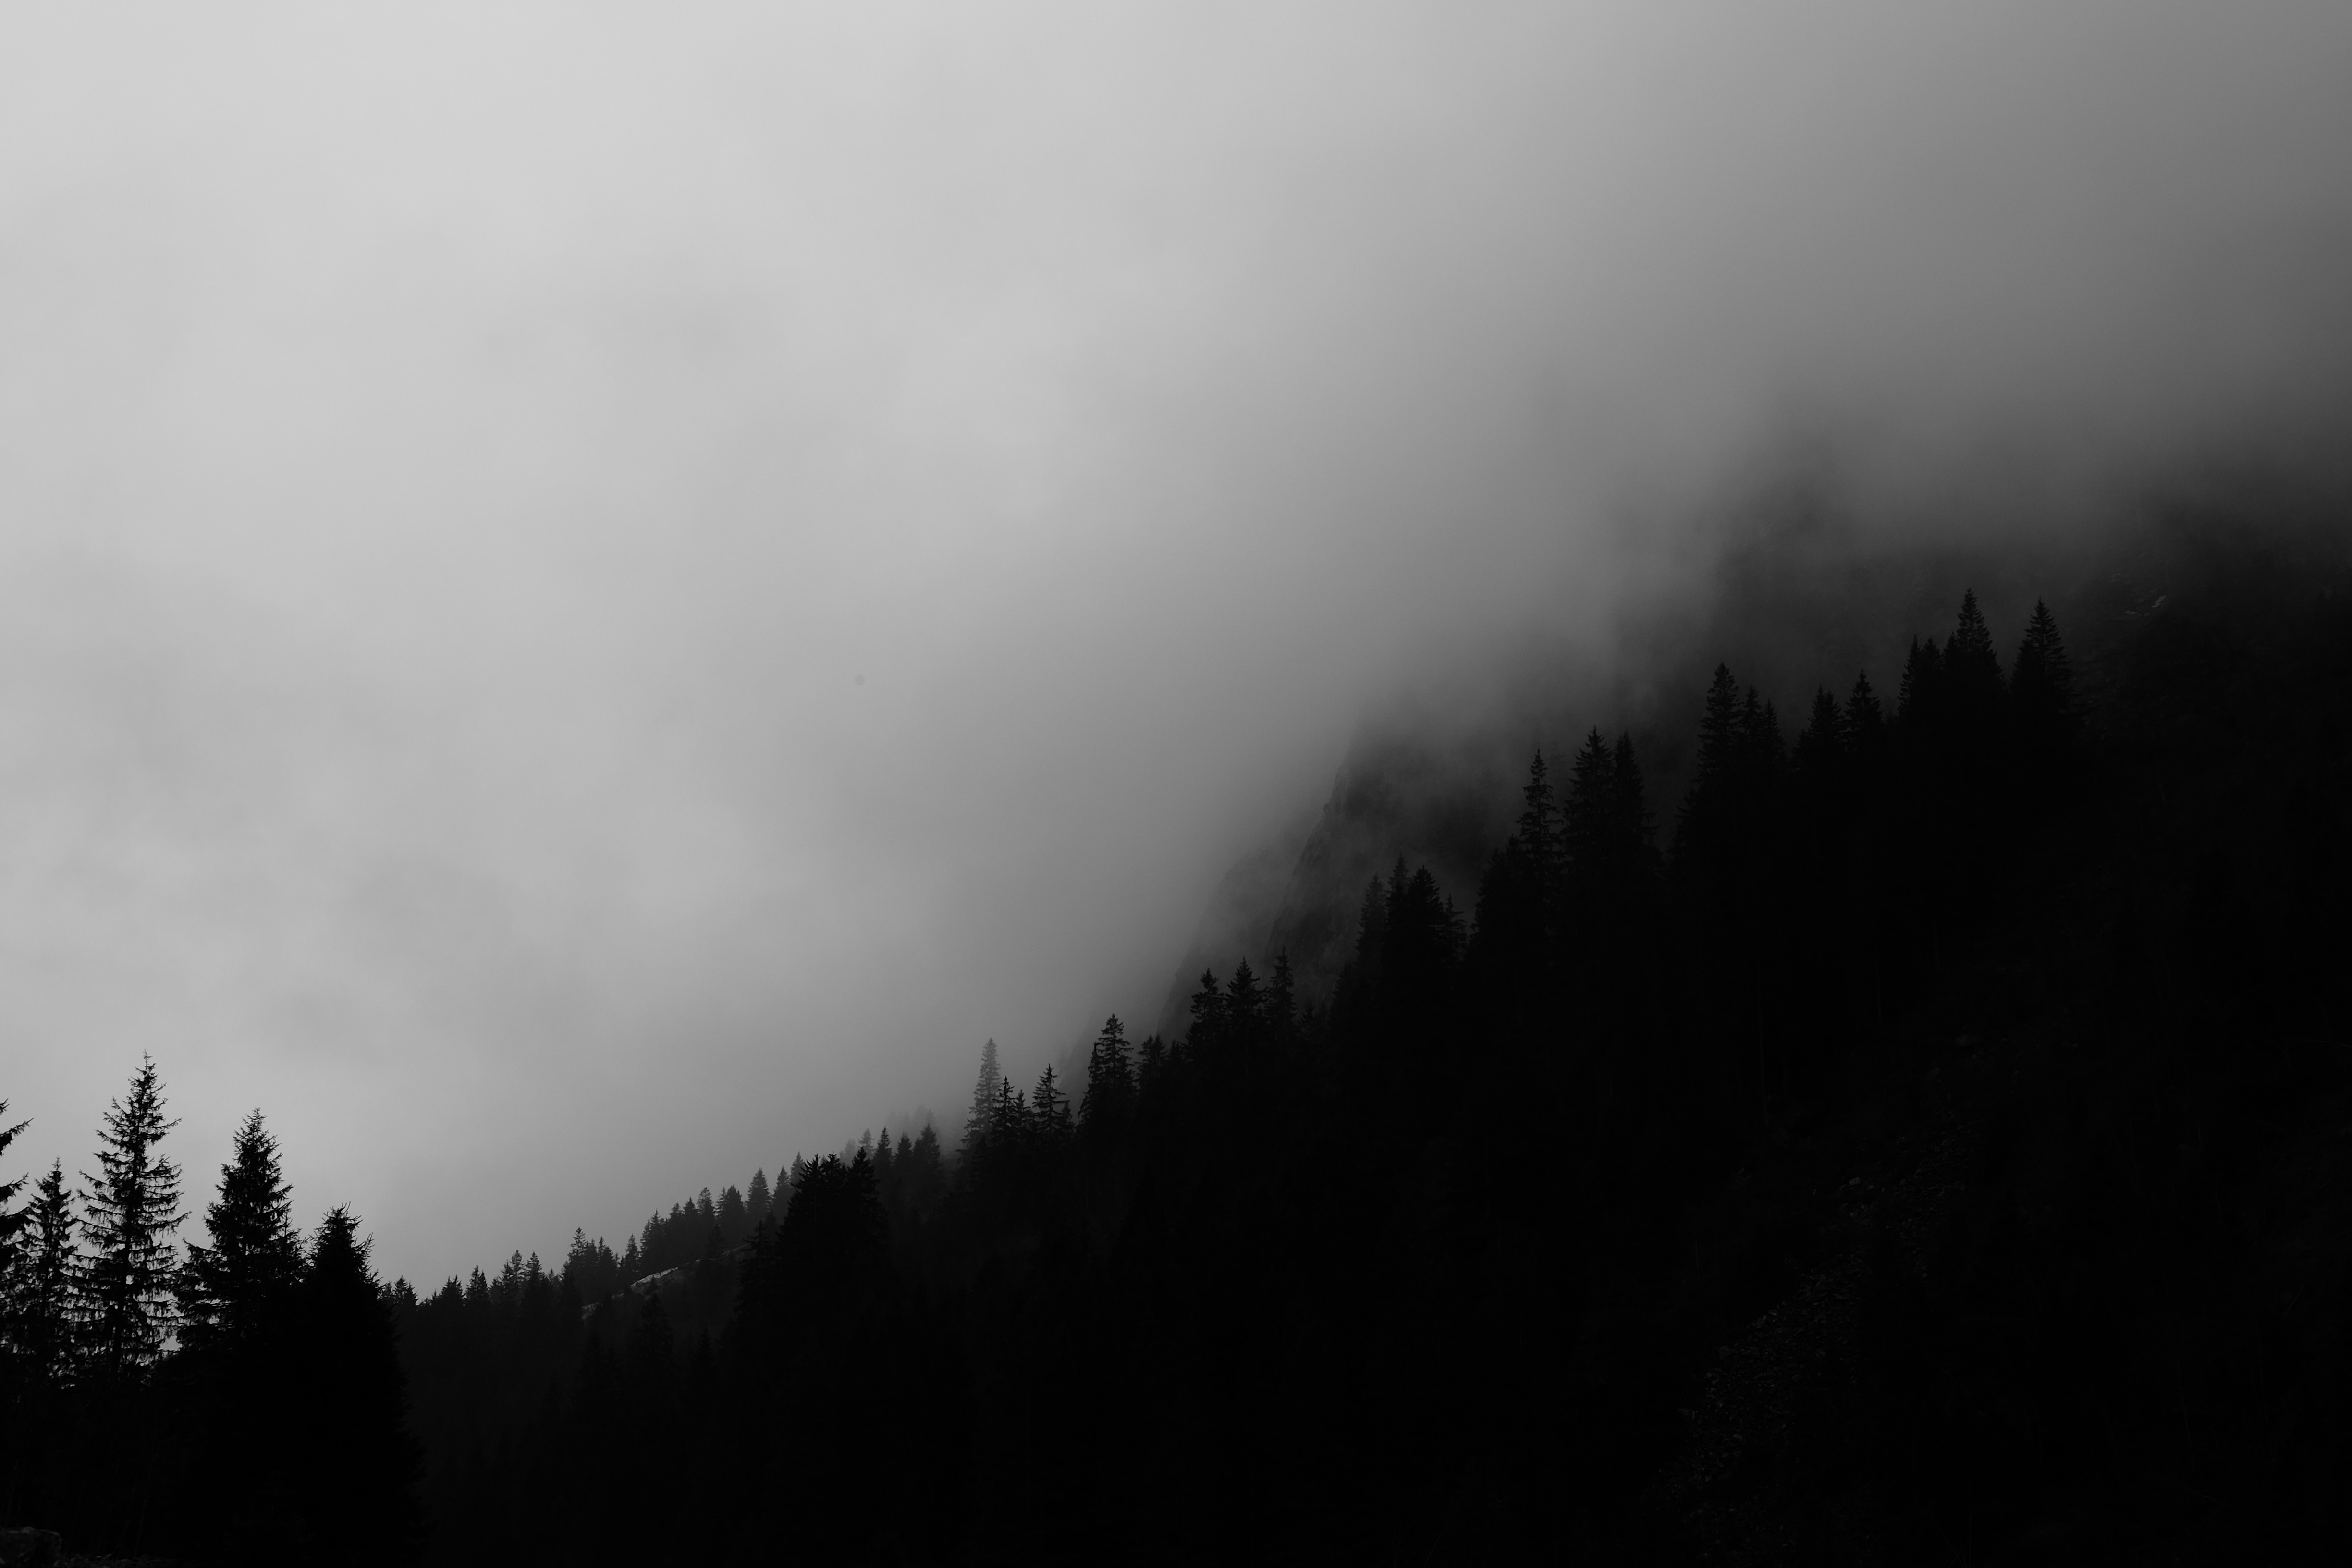 dark, trees, black, forest, fog, bw, chb lock screen backgrounds